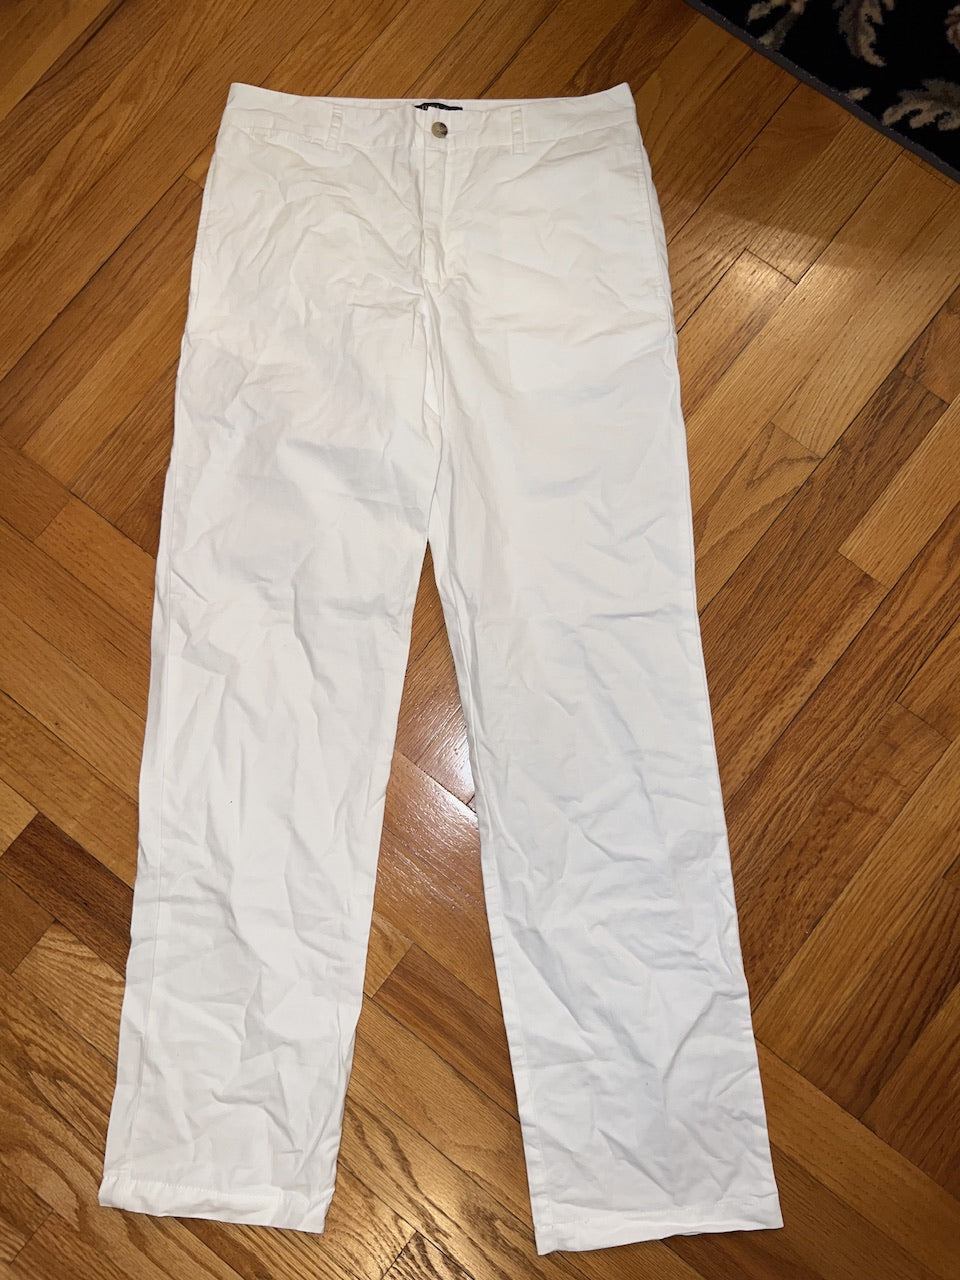 Ralph Lauren Polo White Cotton Pants size 18 18